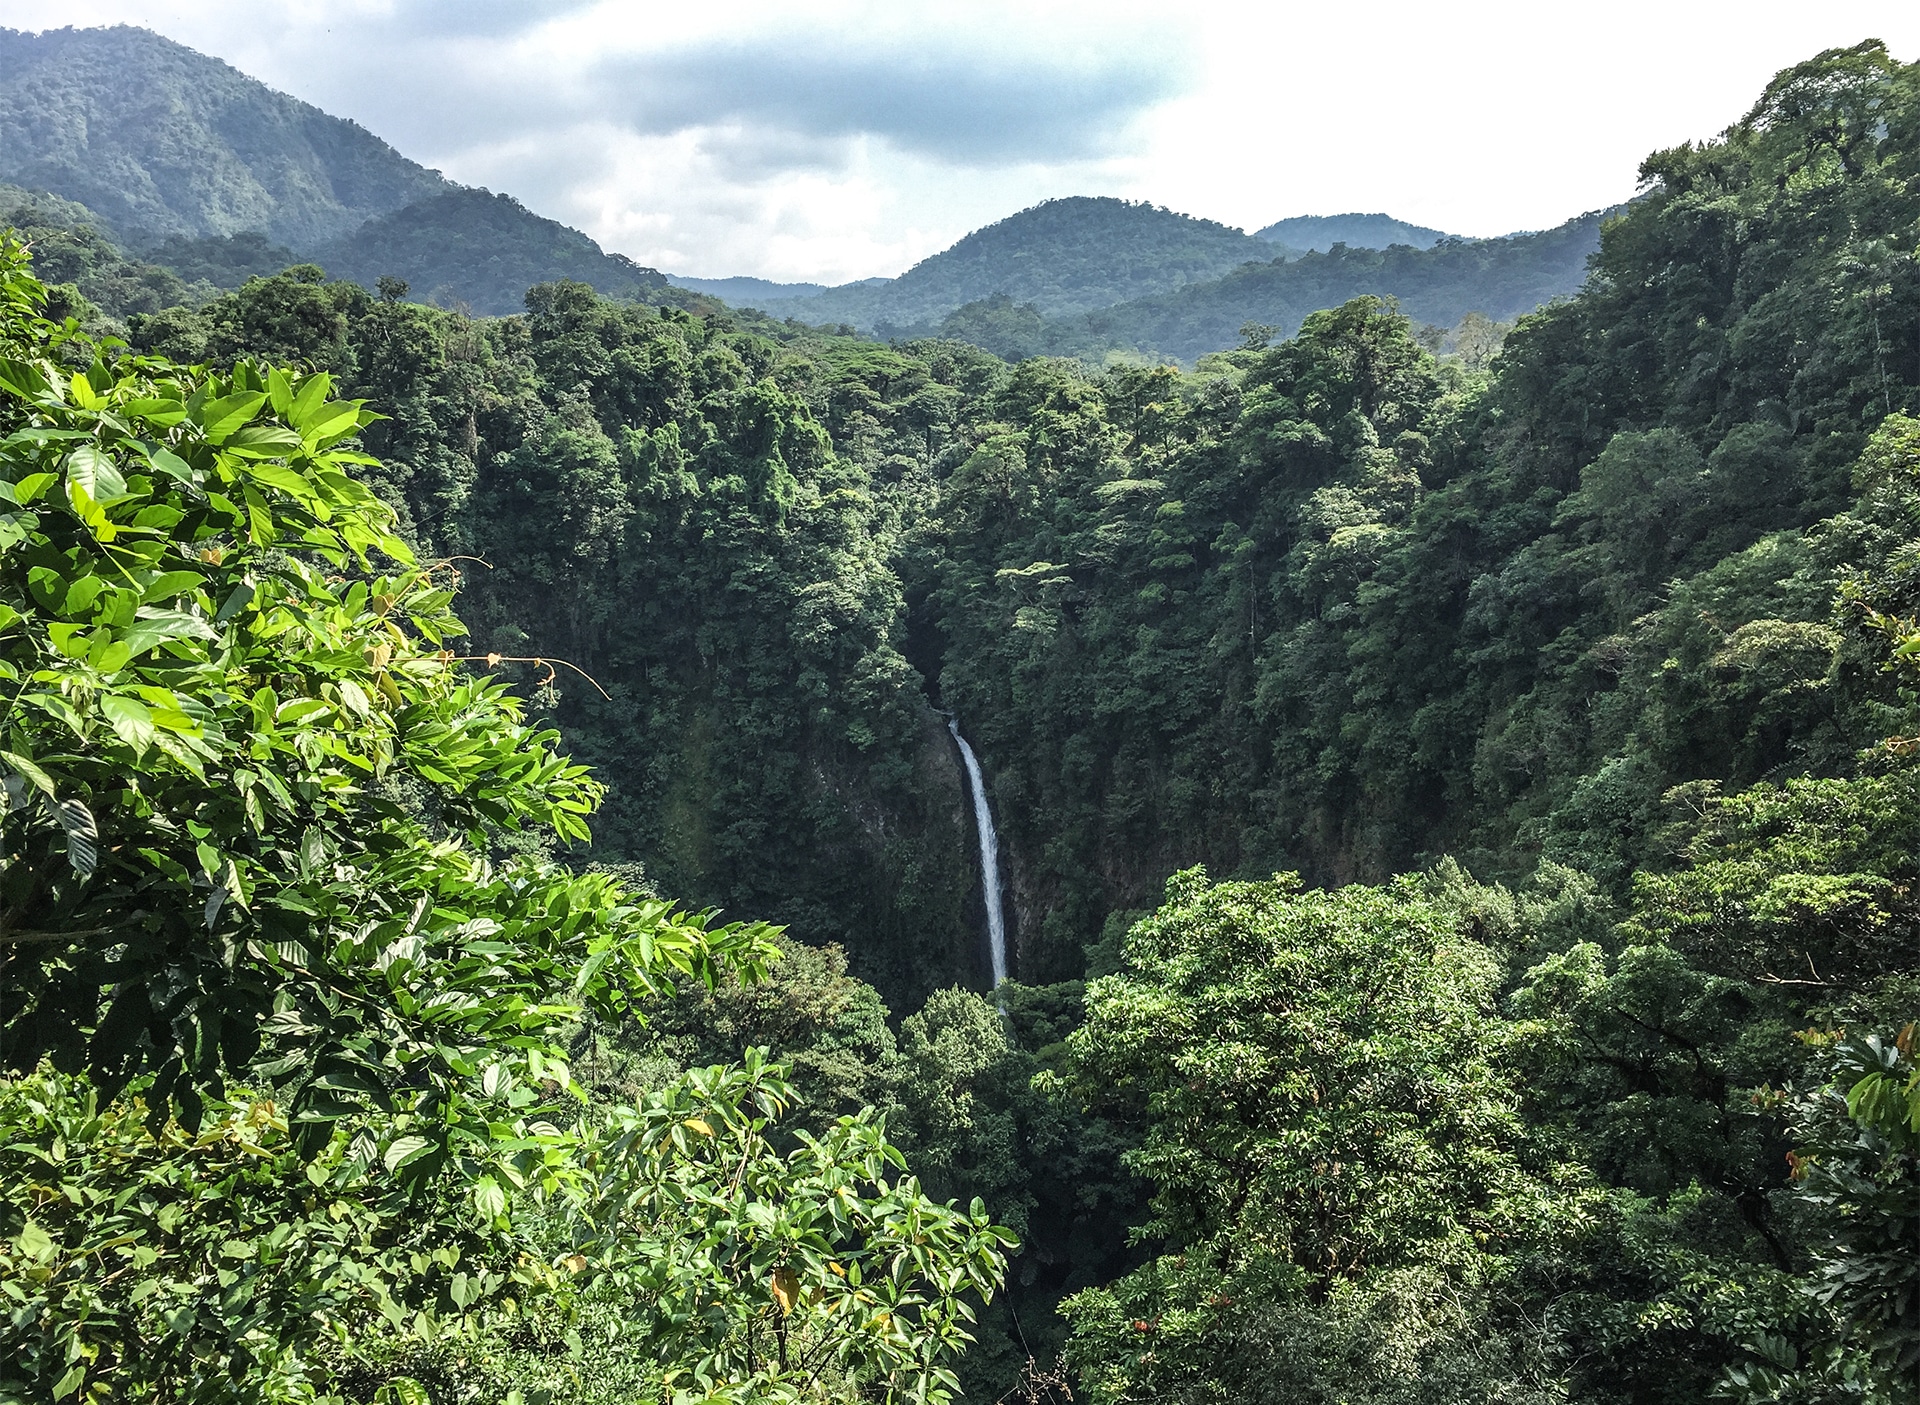 La chute d’eau de La Fortuna au Costa Rica